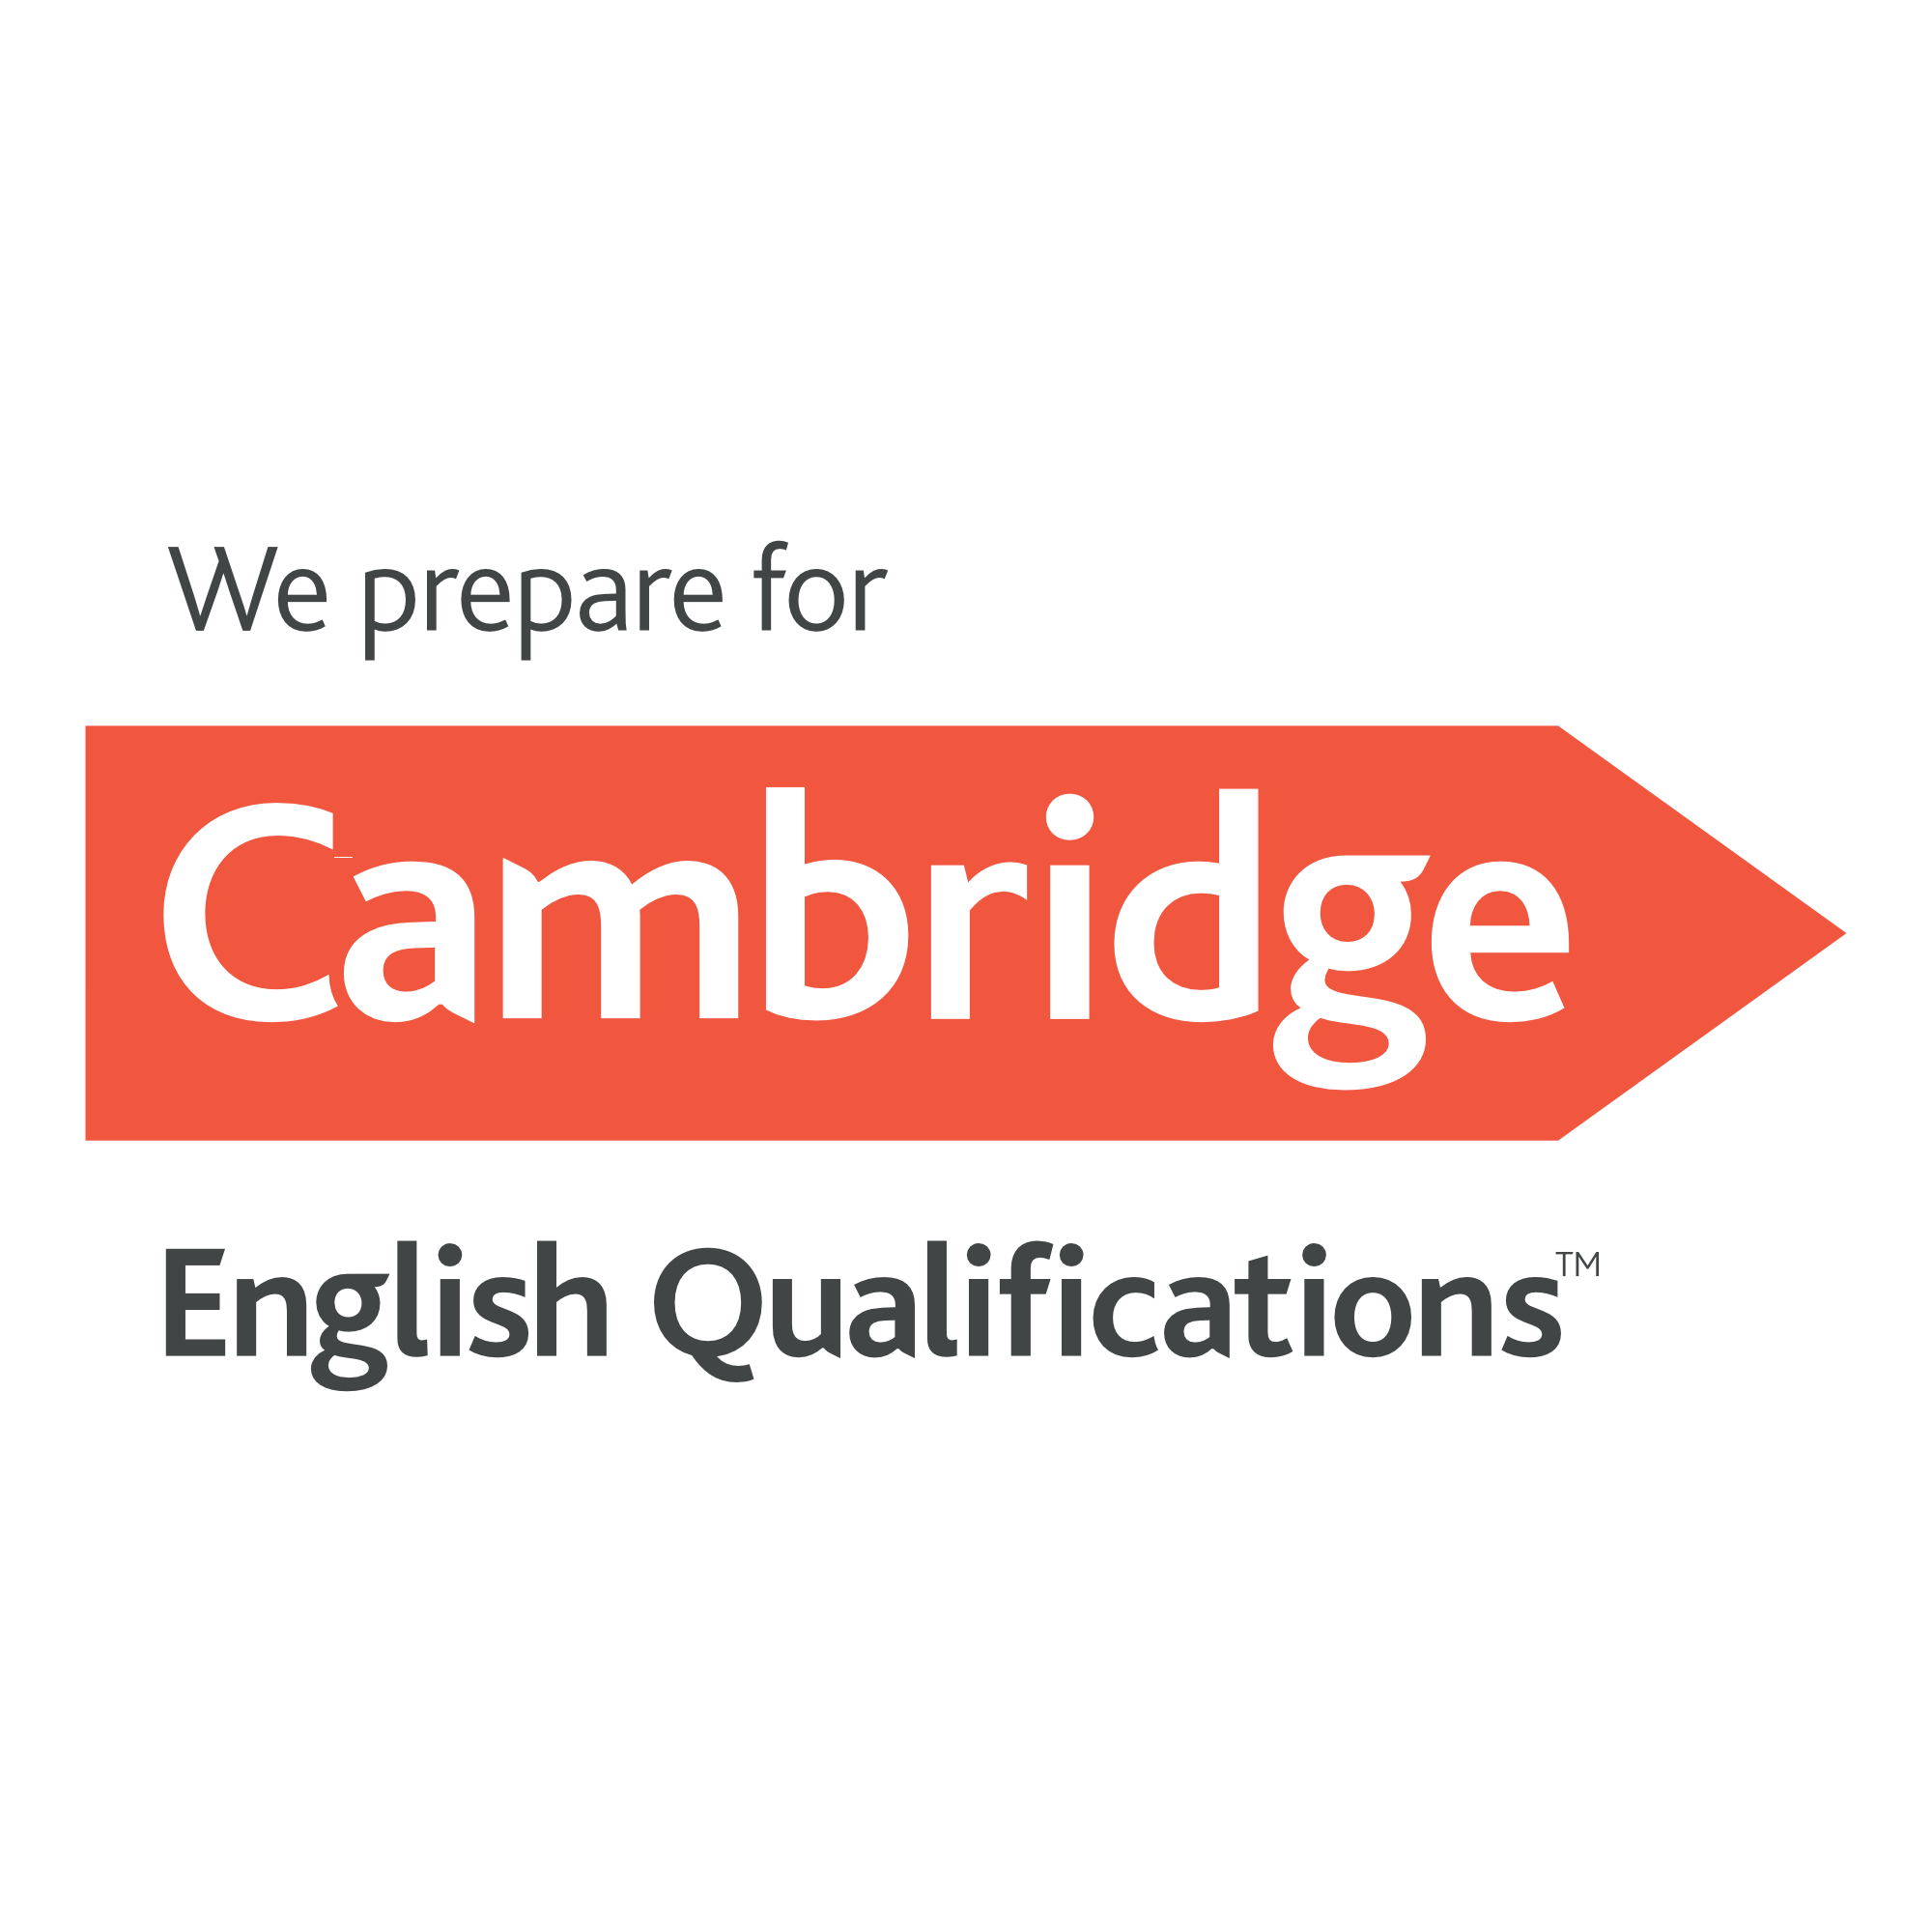 We prepare for Cambridge English Qualifications